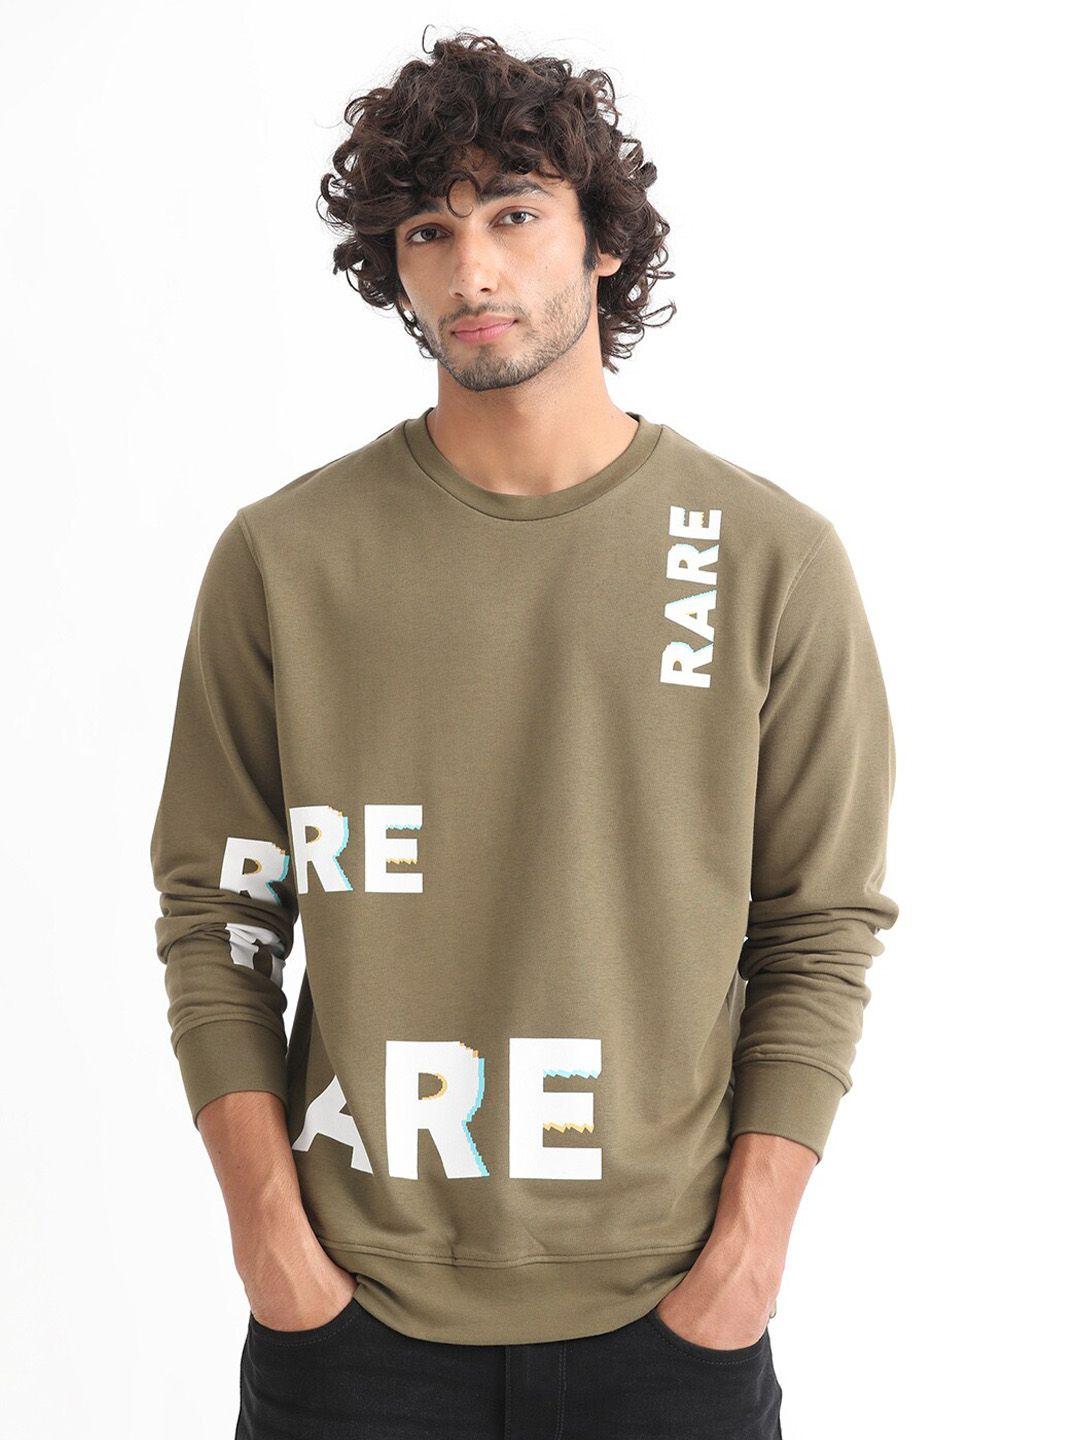 rare-rabbit-typography-printed-cotton-sweatshirt